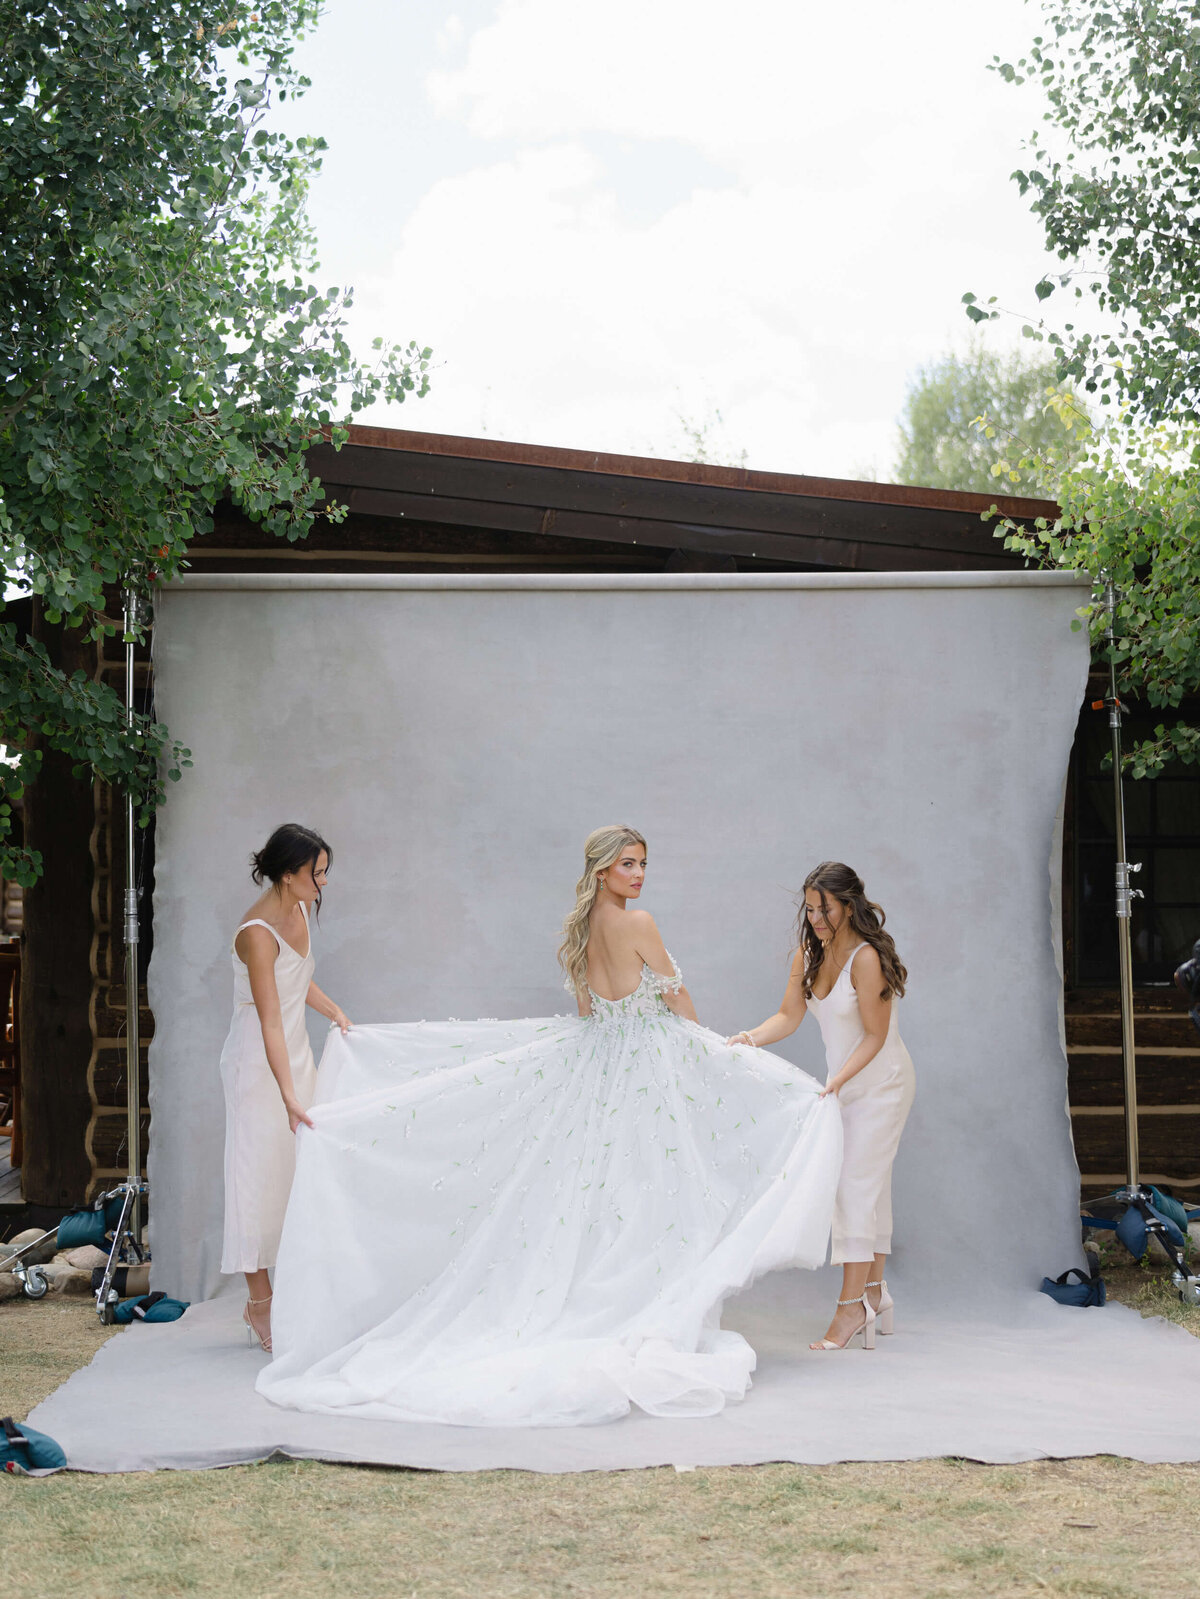 41-KT-Merry-Photography-Western-Wedding-Monique-Lhuillier-Dress